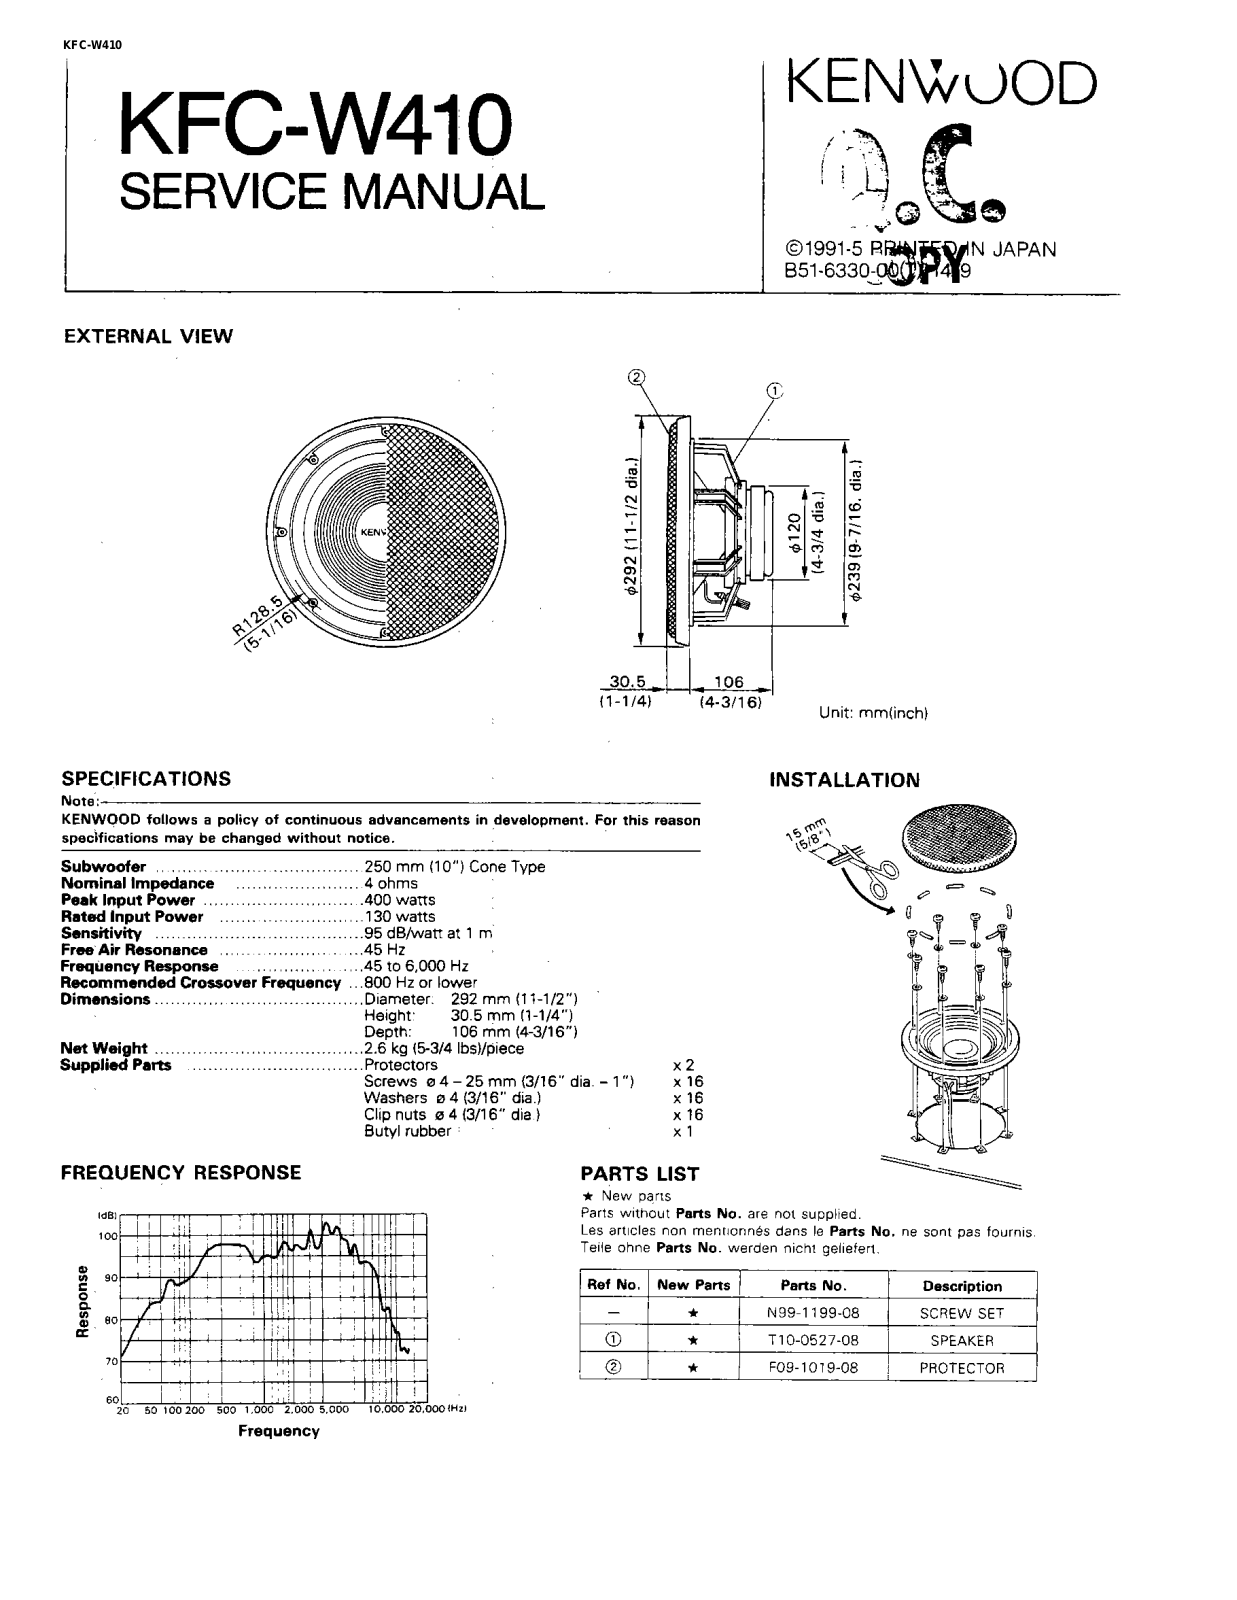 Kenwood KFC-W410 Service Manual